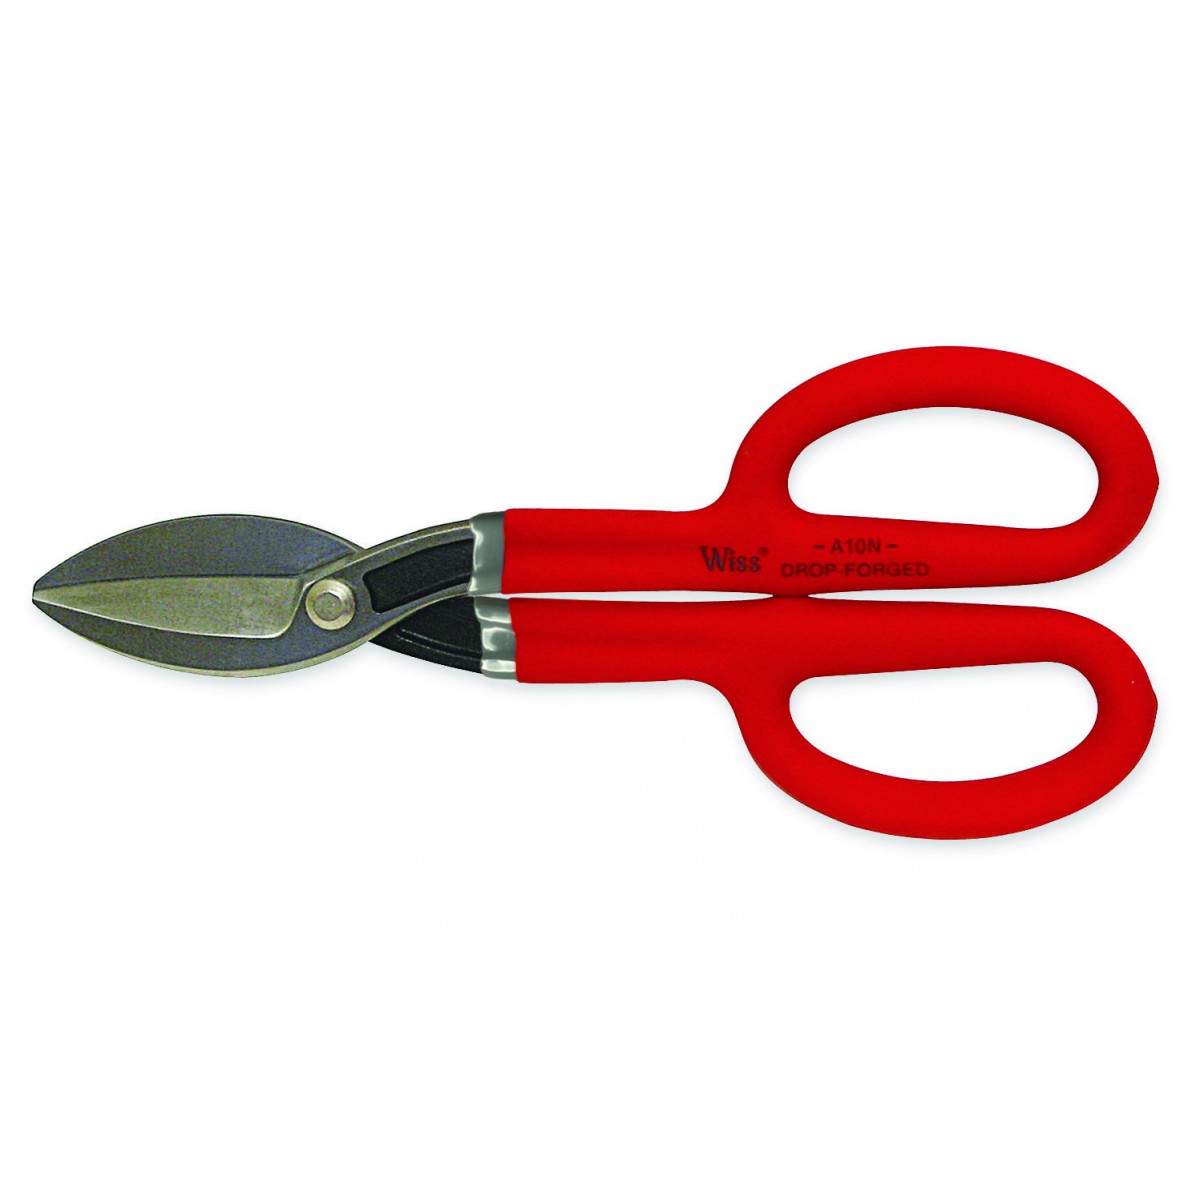 A13N Tinner's Snip, 7 in OAL, 1-3/4 in L Cut, Straight Cut, Steel Blade, Cushion-Grip Handle, Red Handle